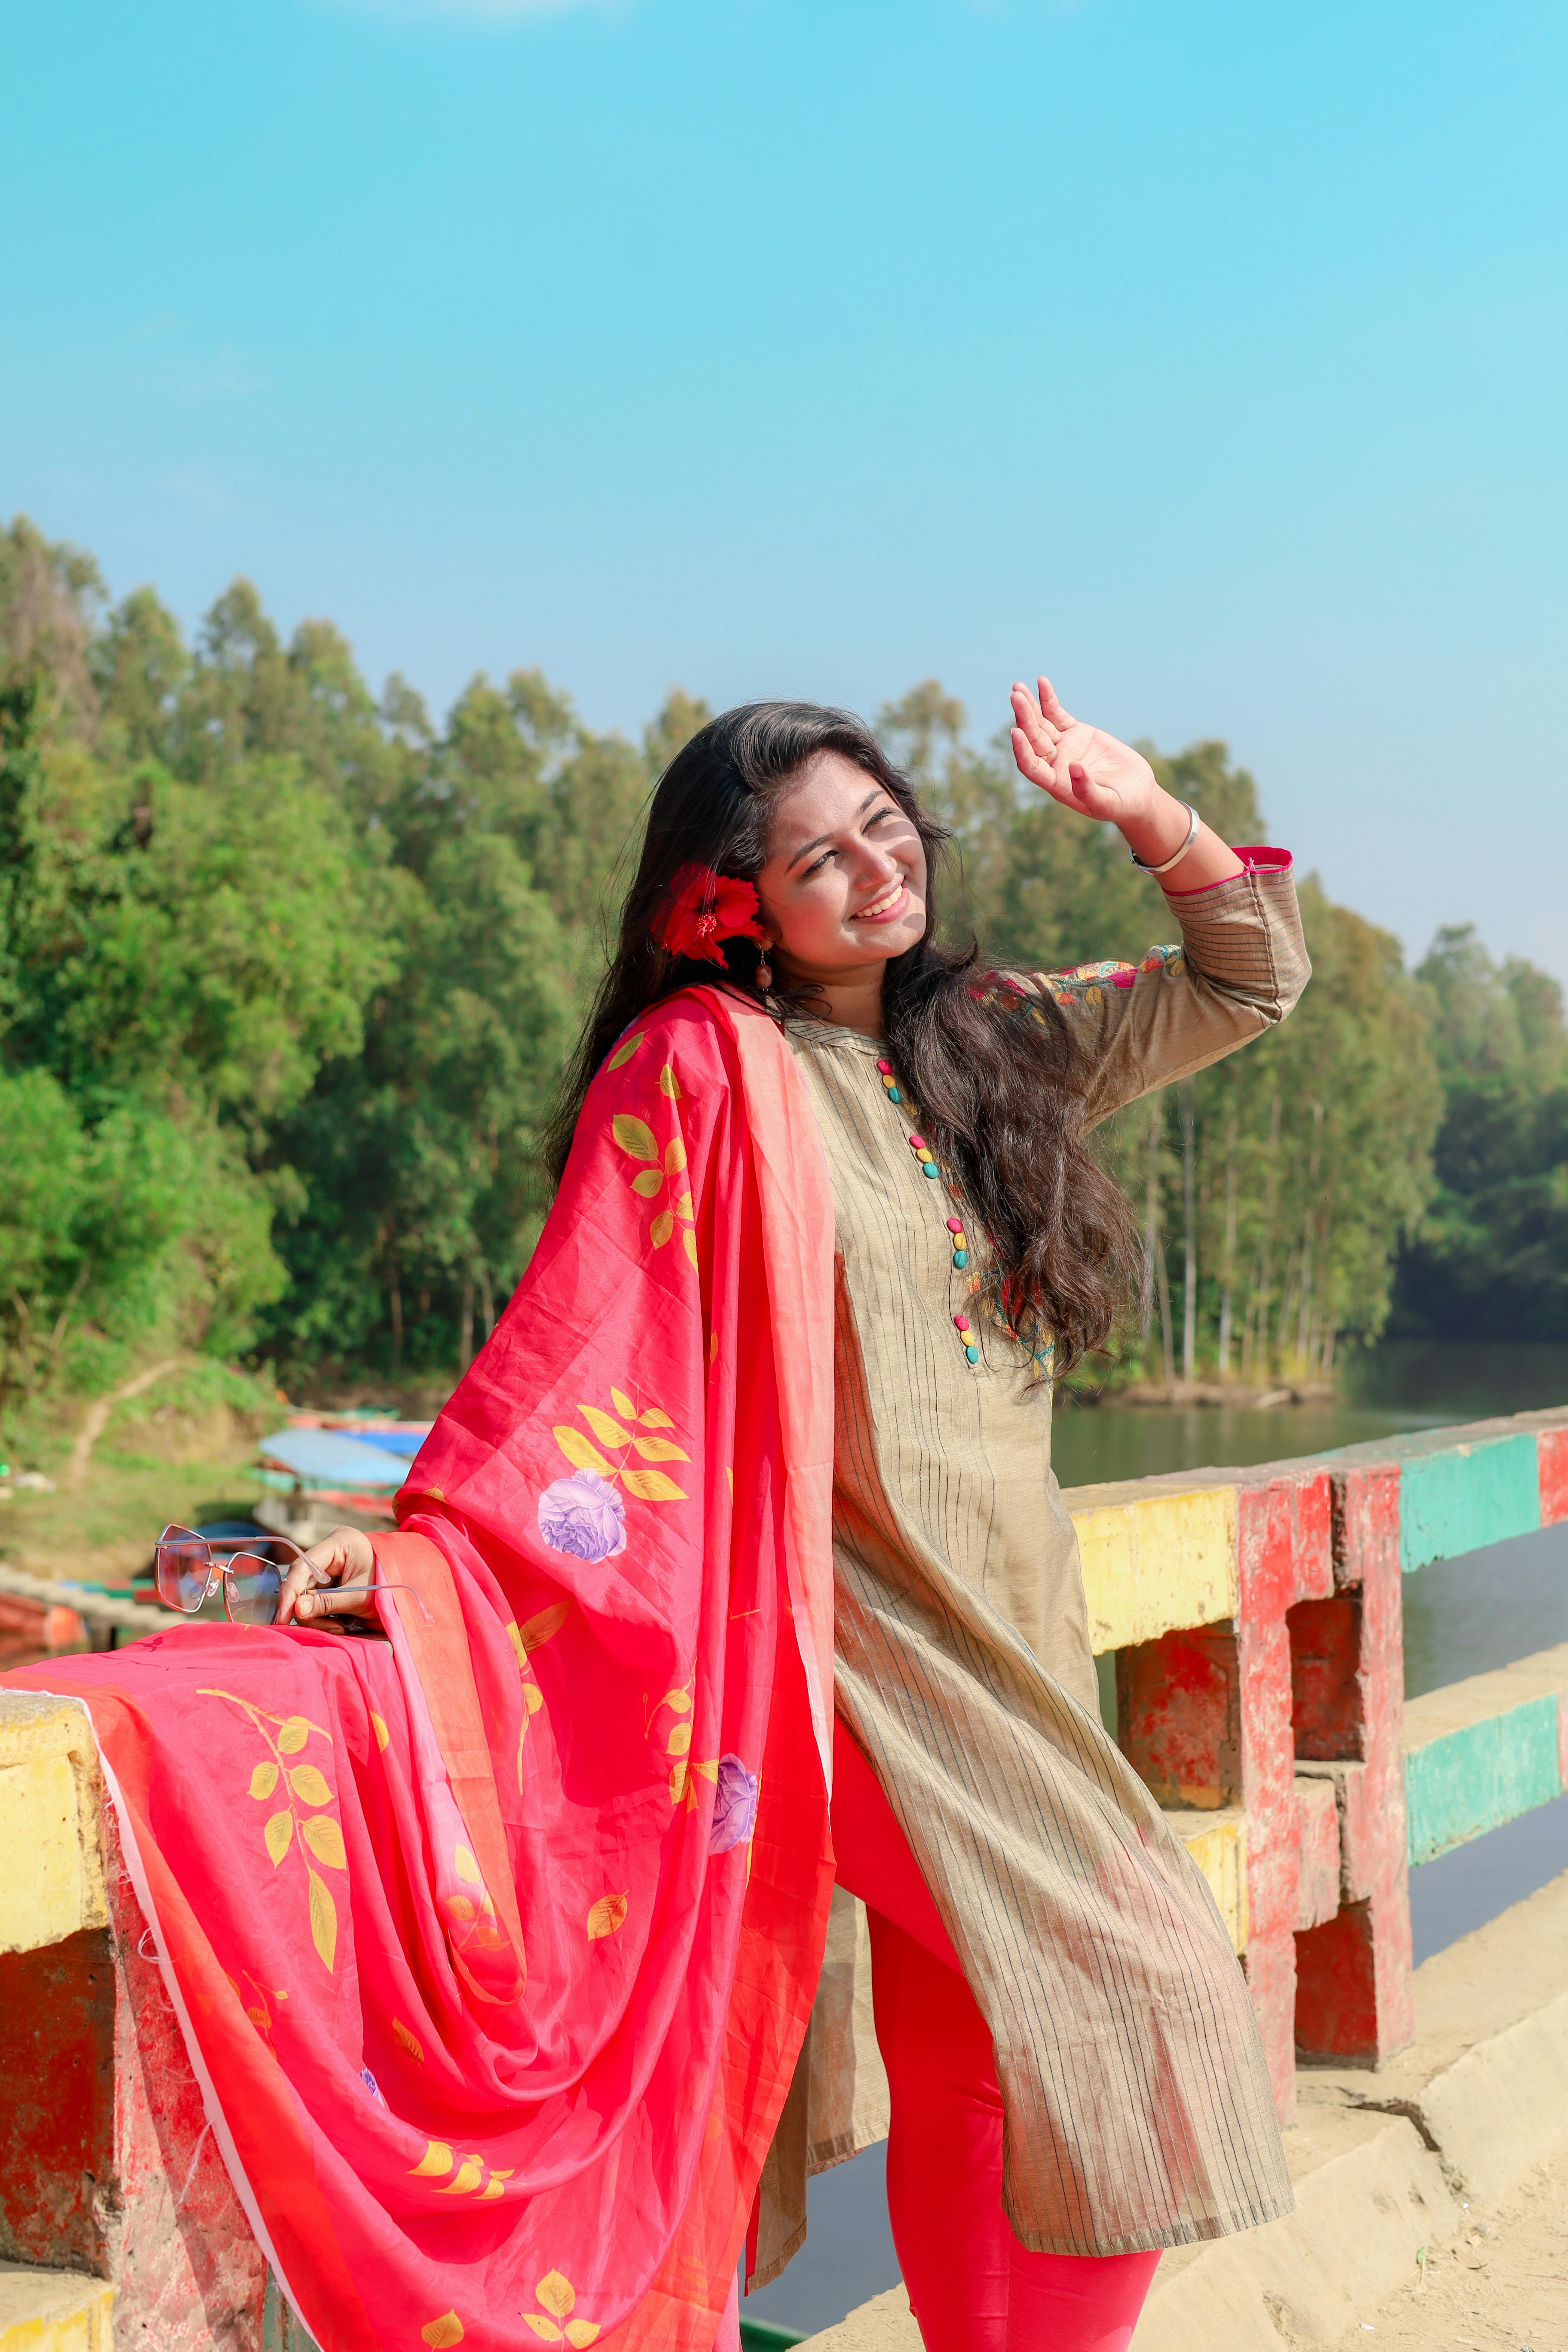 Patiala salwer suit photo poses idea || Patiala Salwar photo poses for  girls || photo poses - YouTube